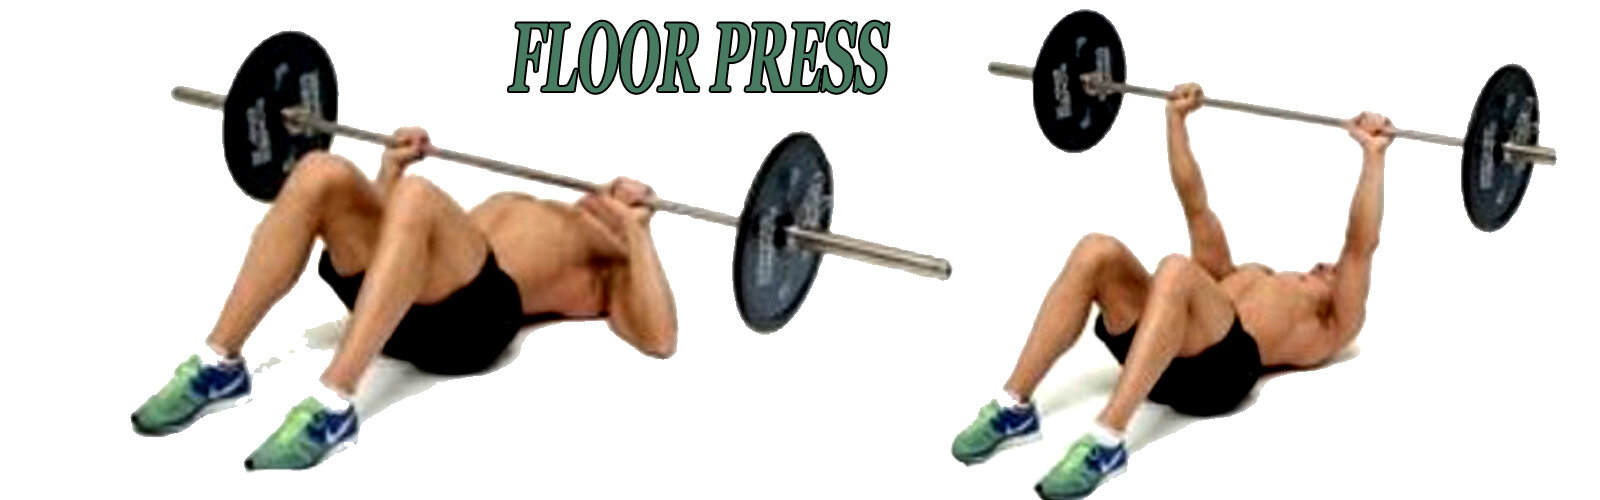 Floor Press Exercise Bigger Chest